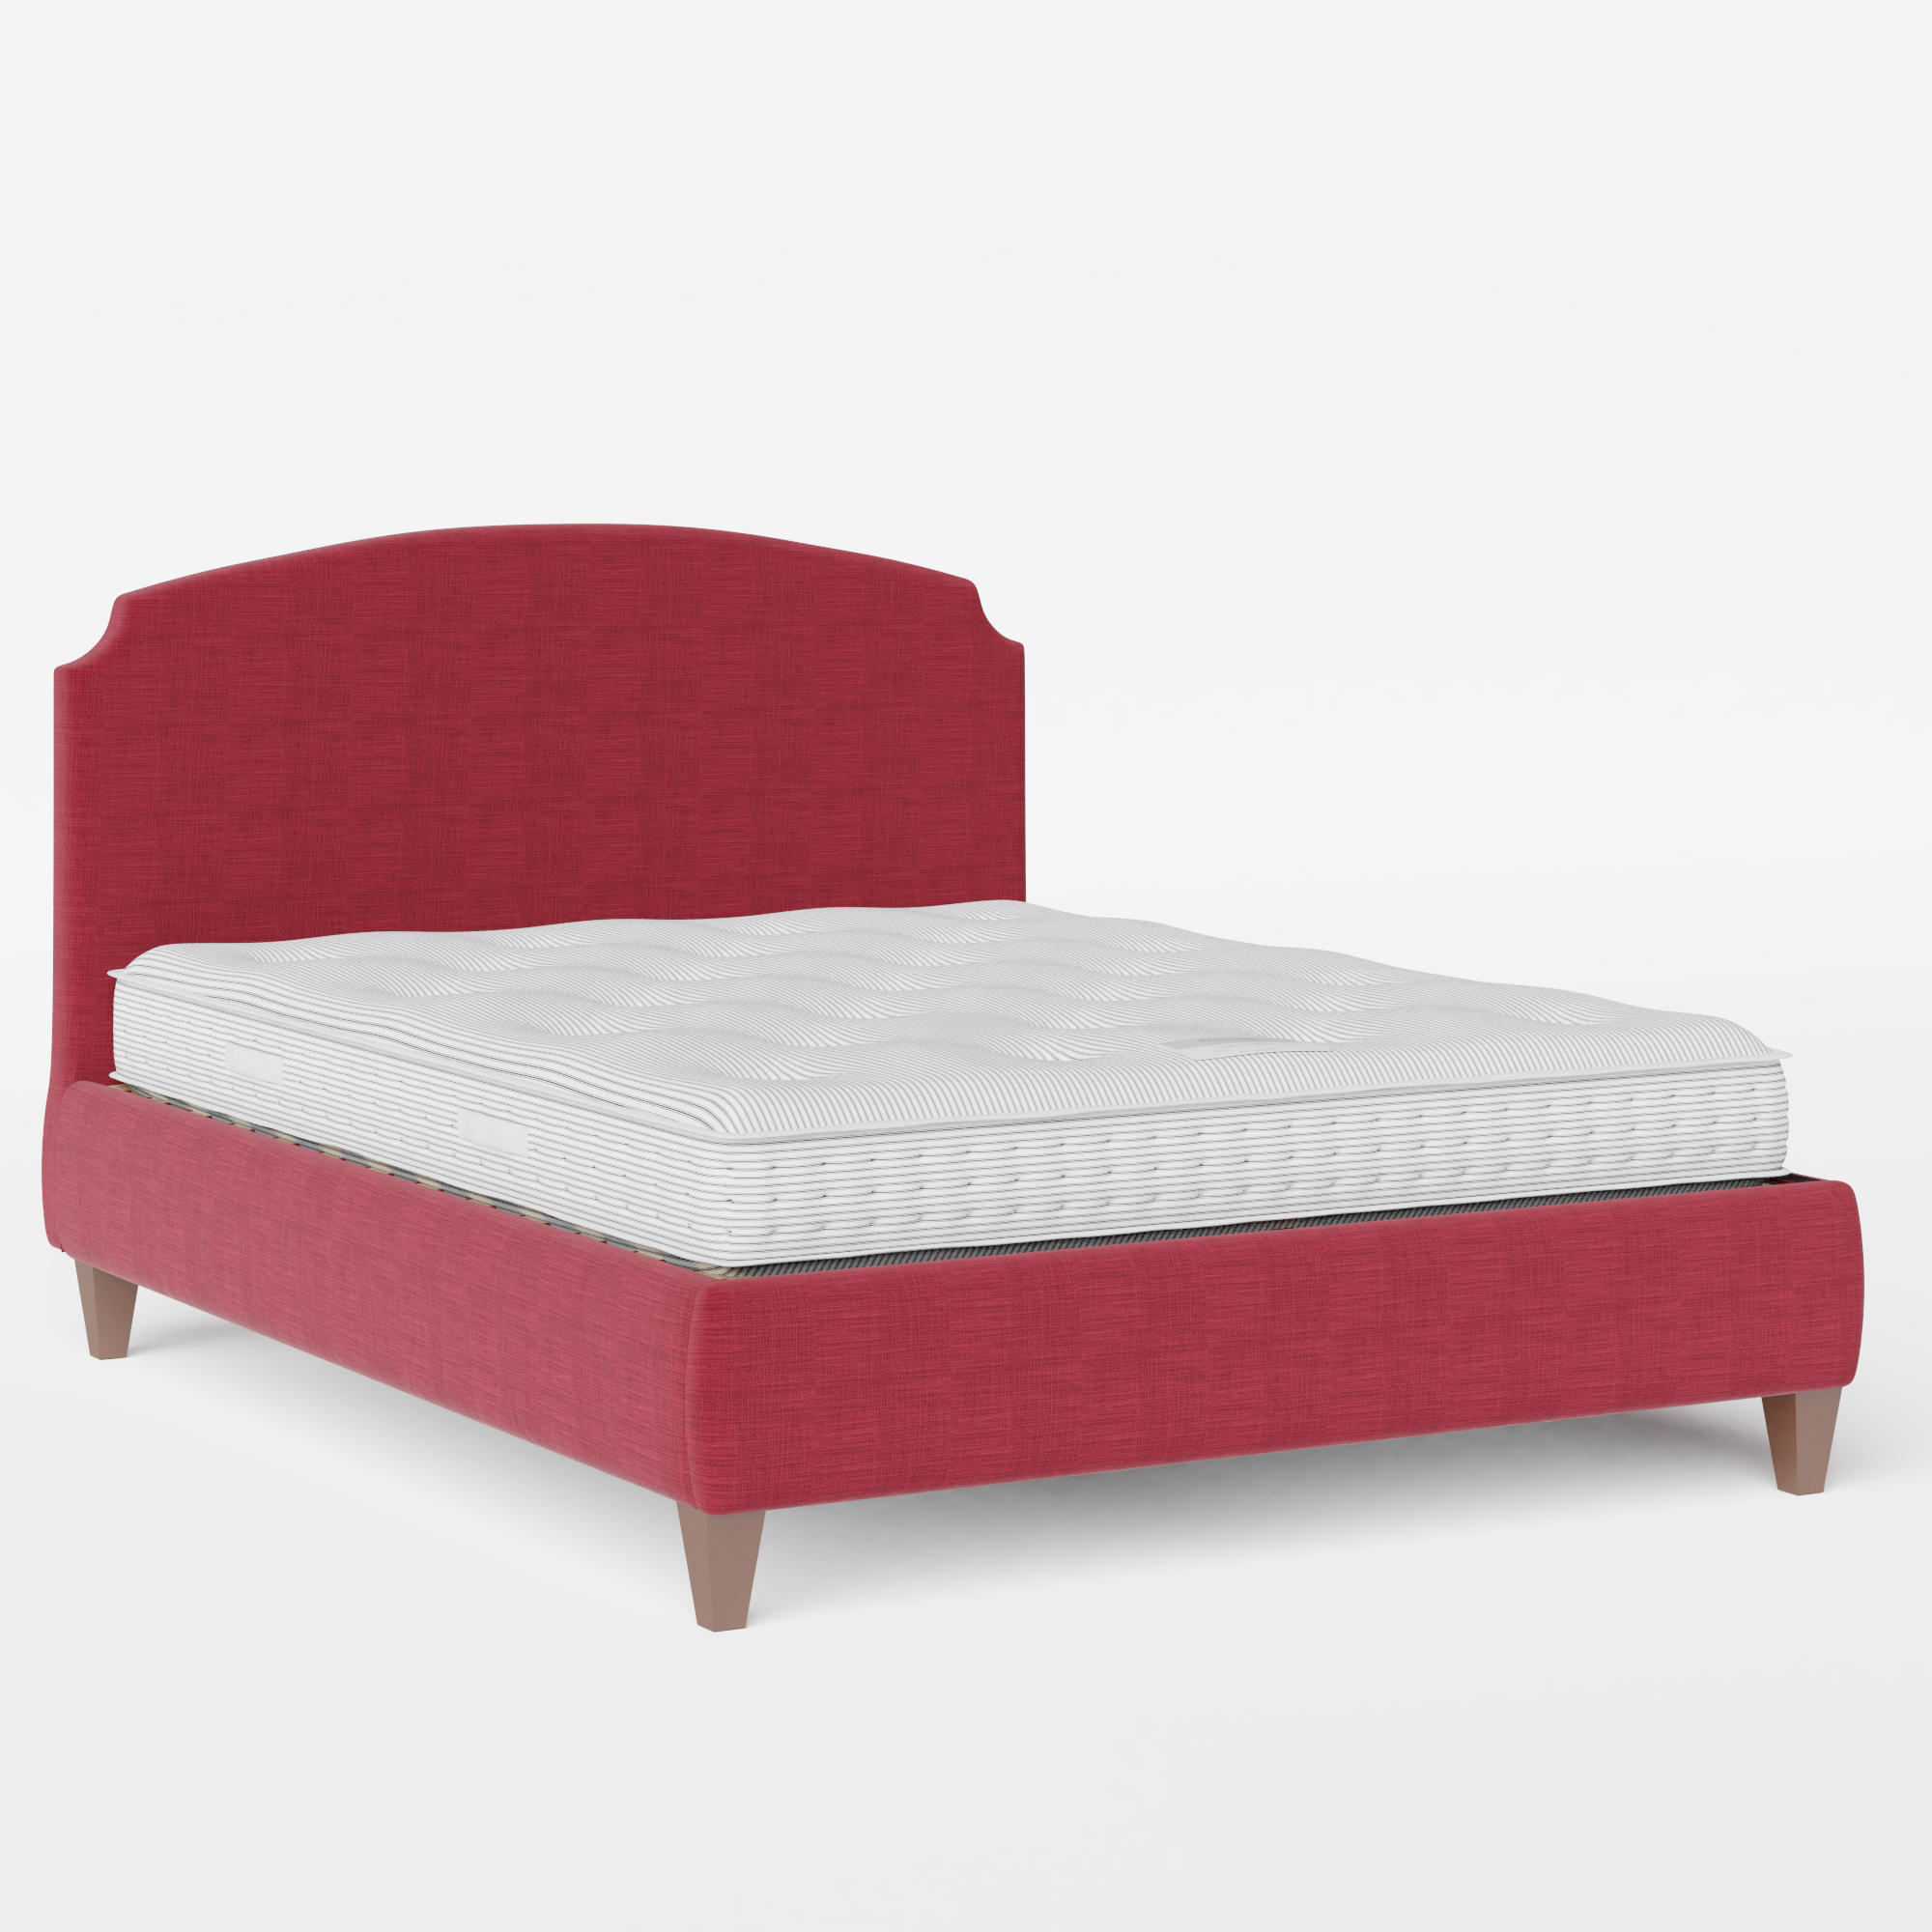 Lide cama tapizada en tela cherry